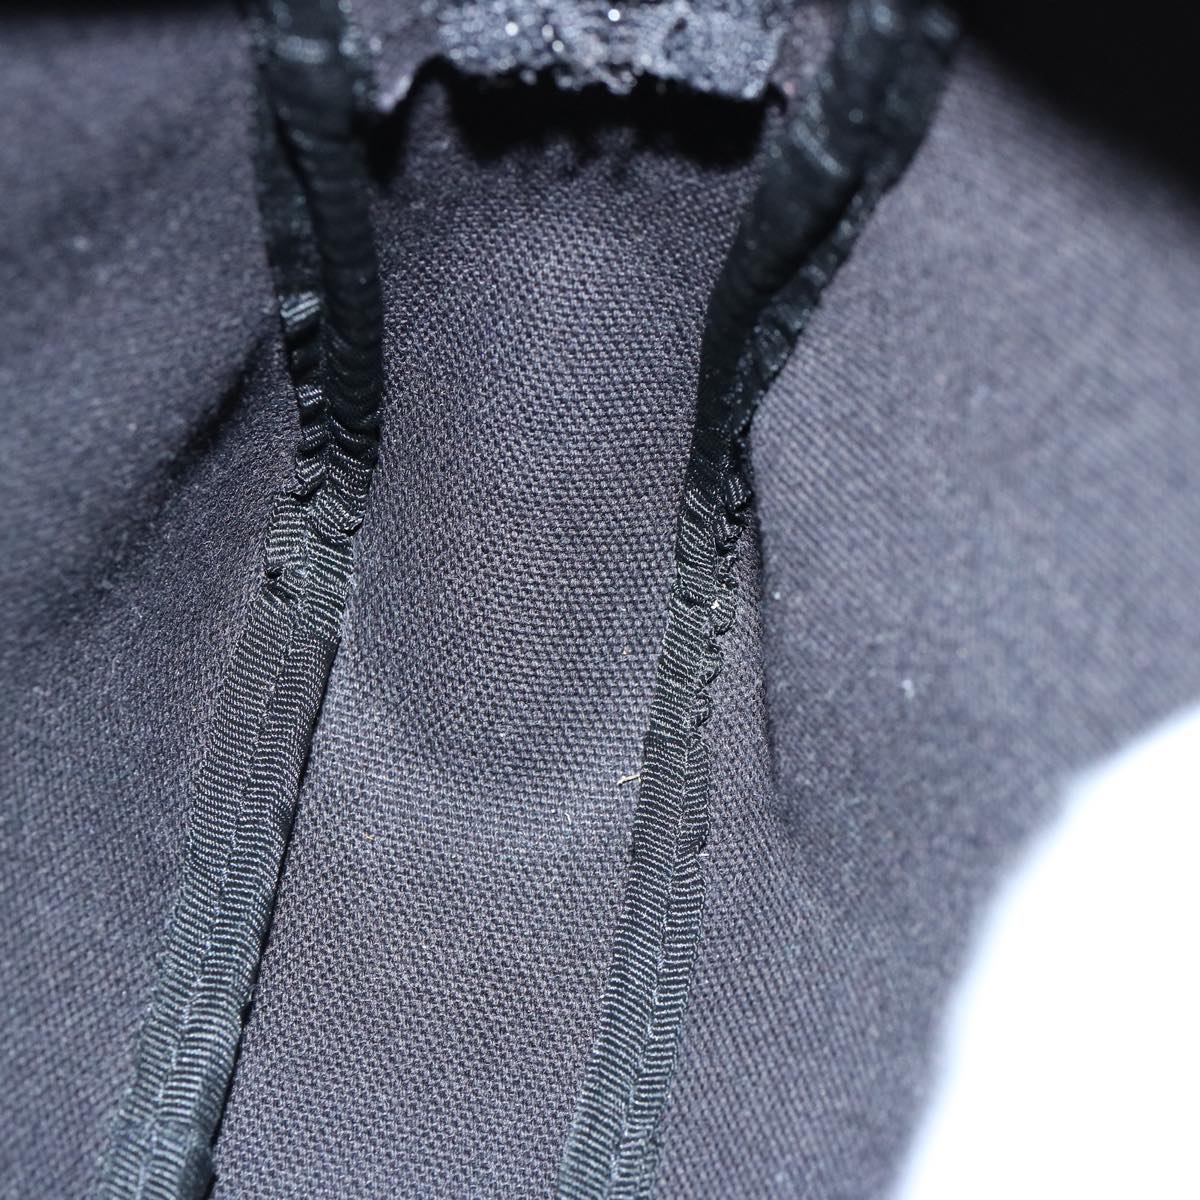 Burberry Nova Check Shoulder Bag Pvc Beige Black Auth 58498